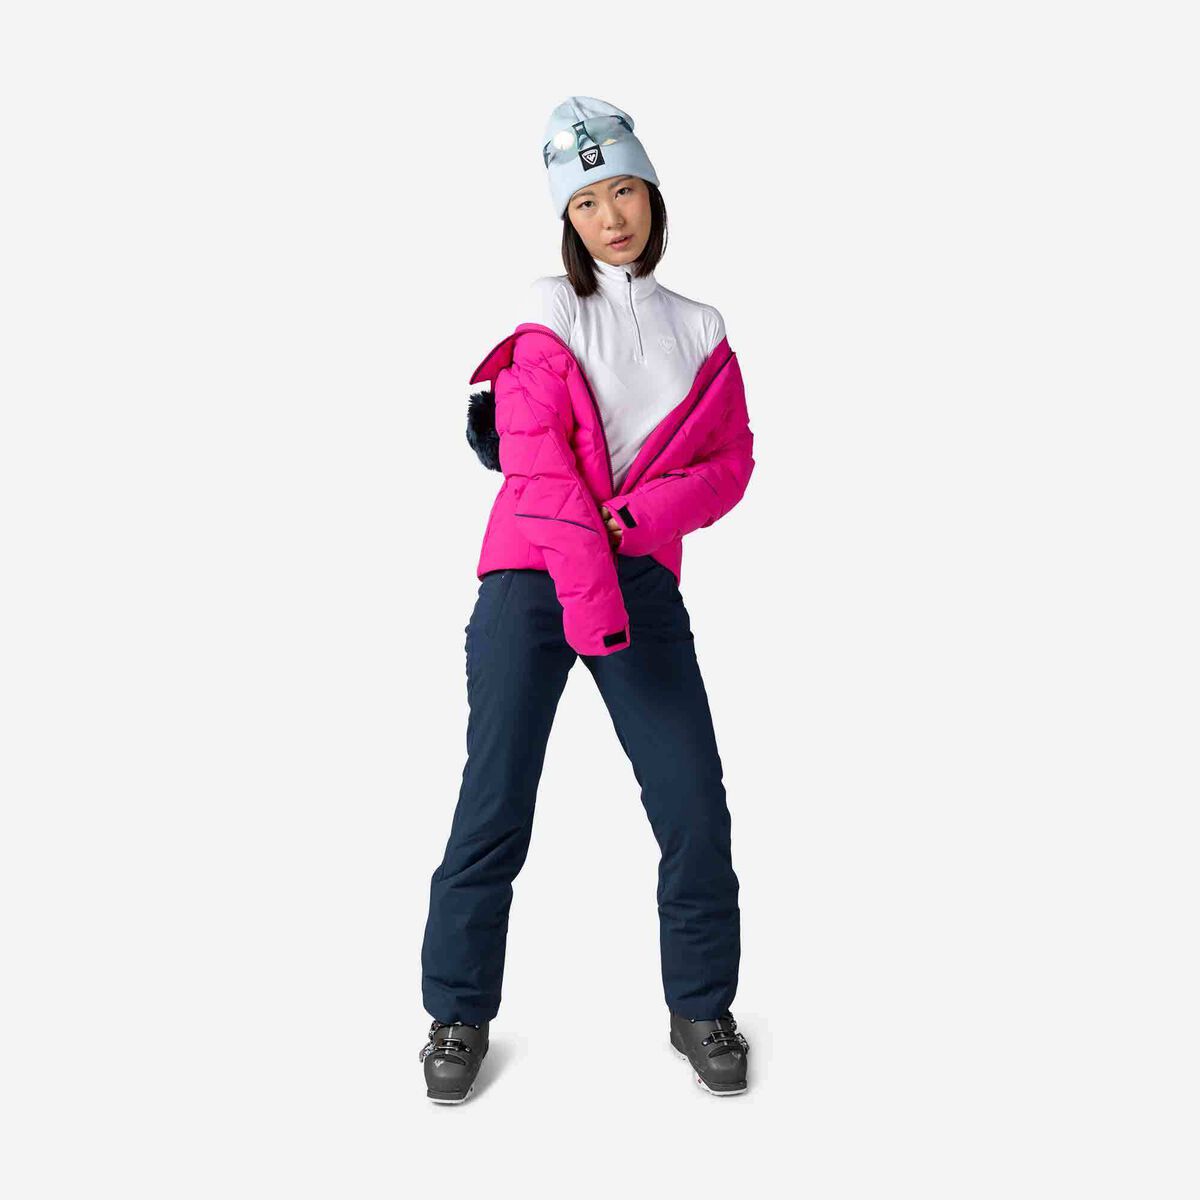 Pantalon de ski Staci femme